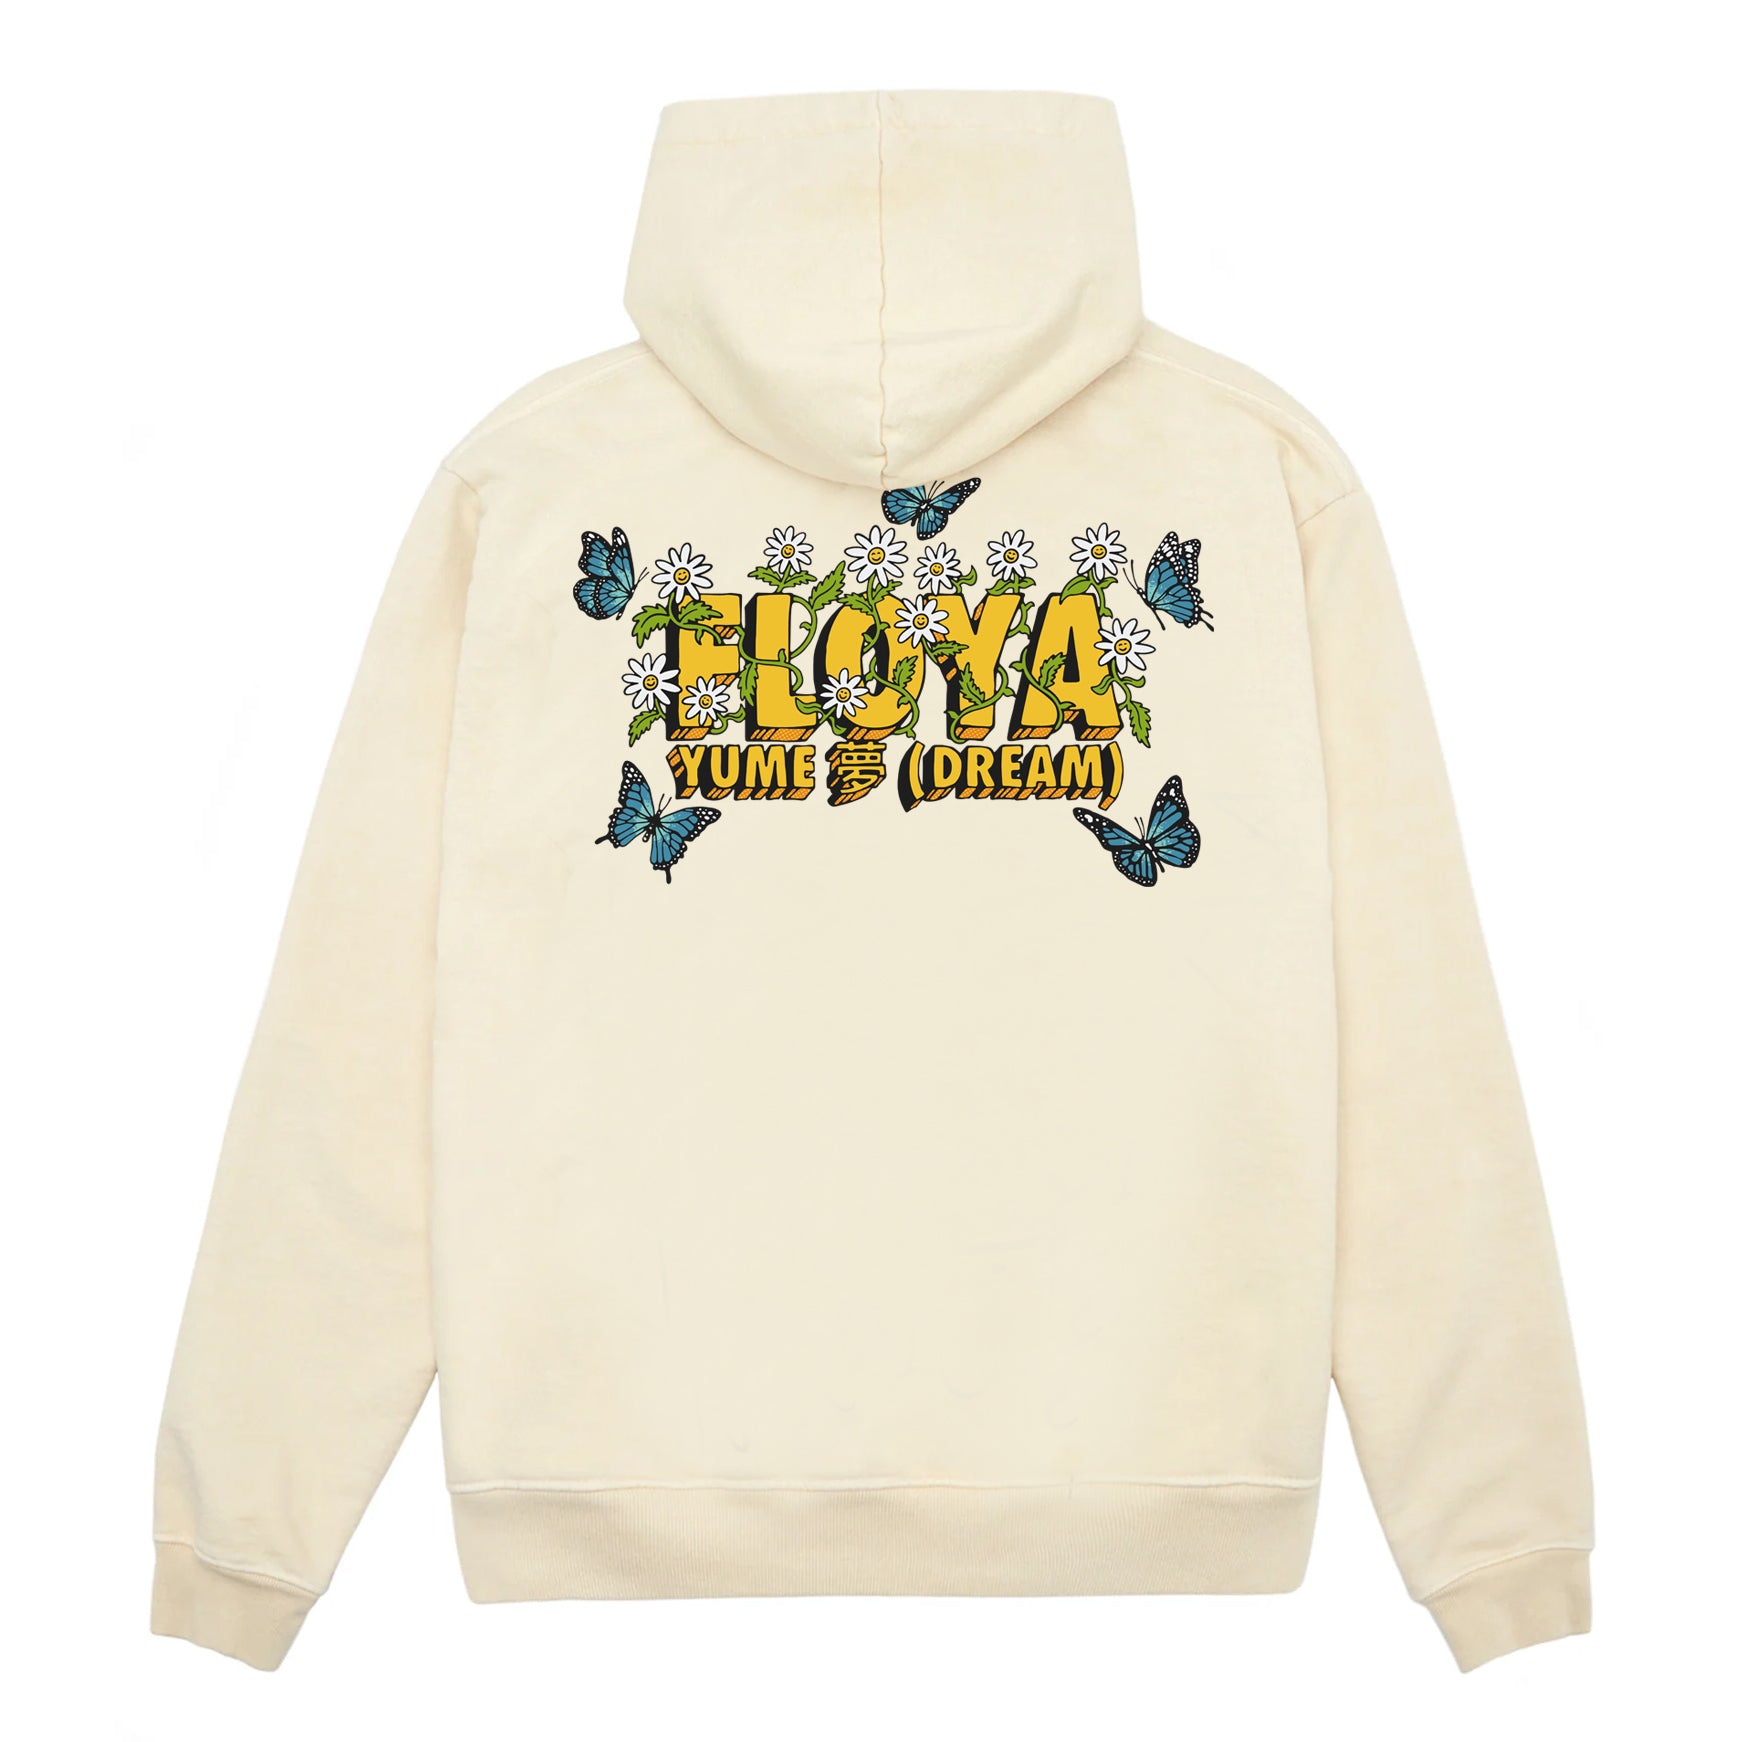 FLOYA | Official Website & Merchandise